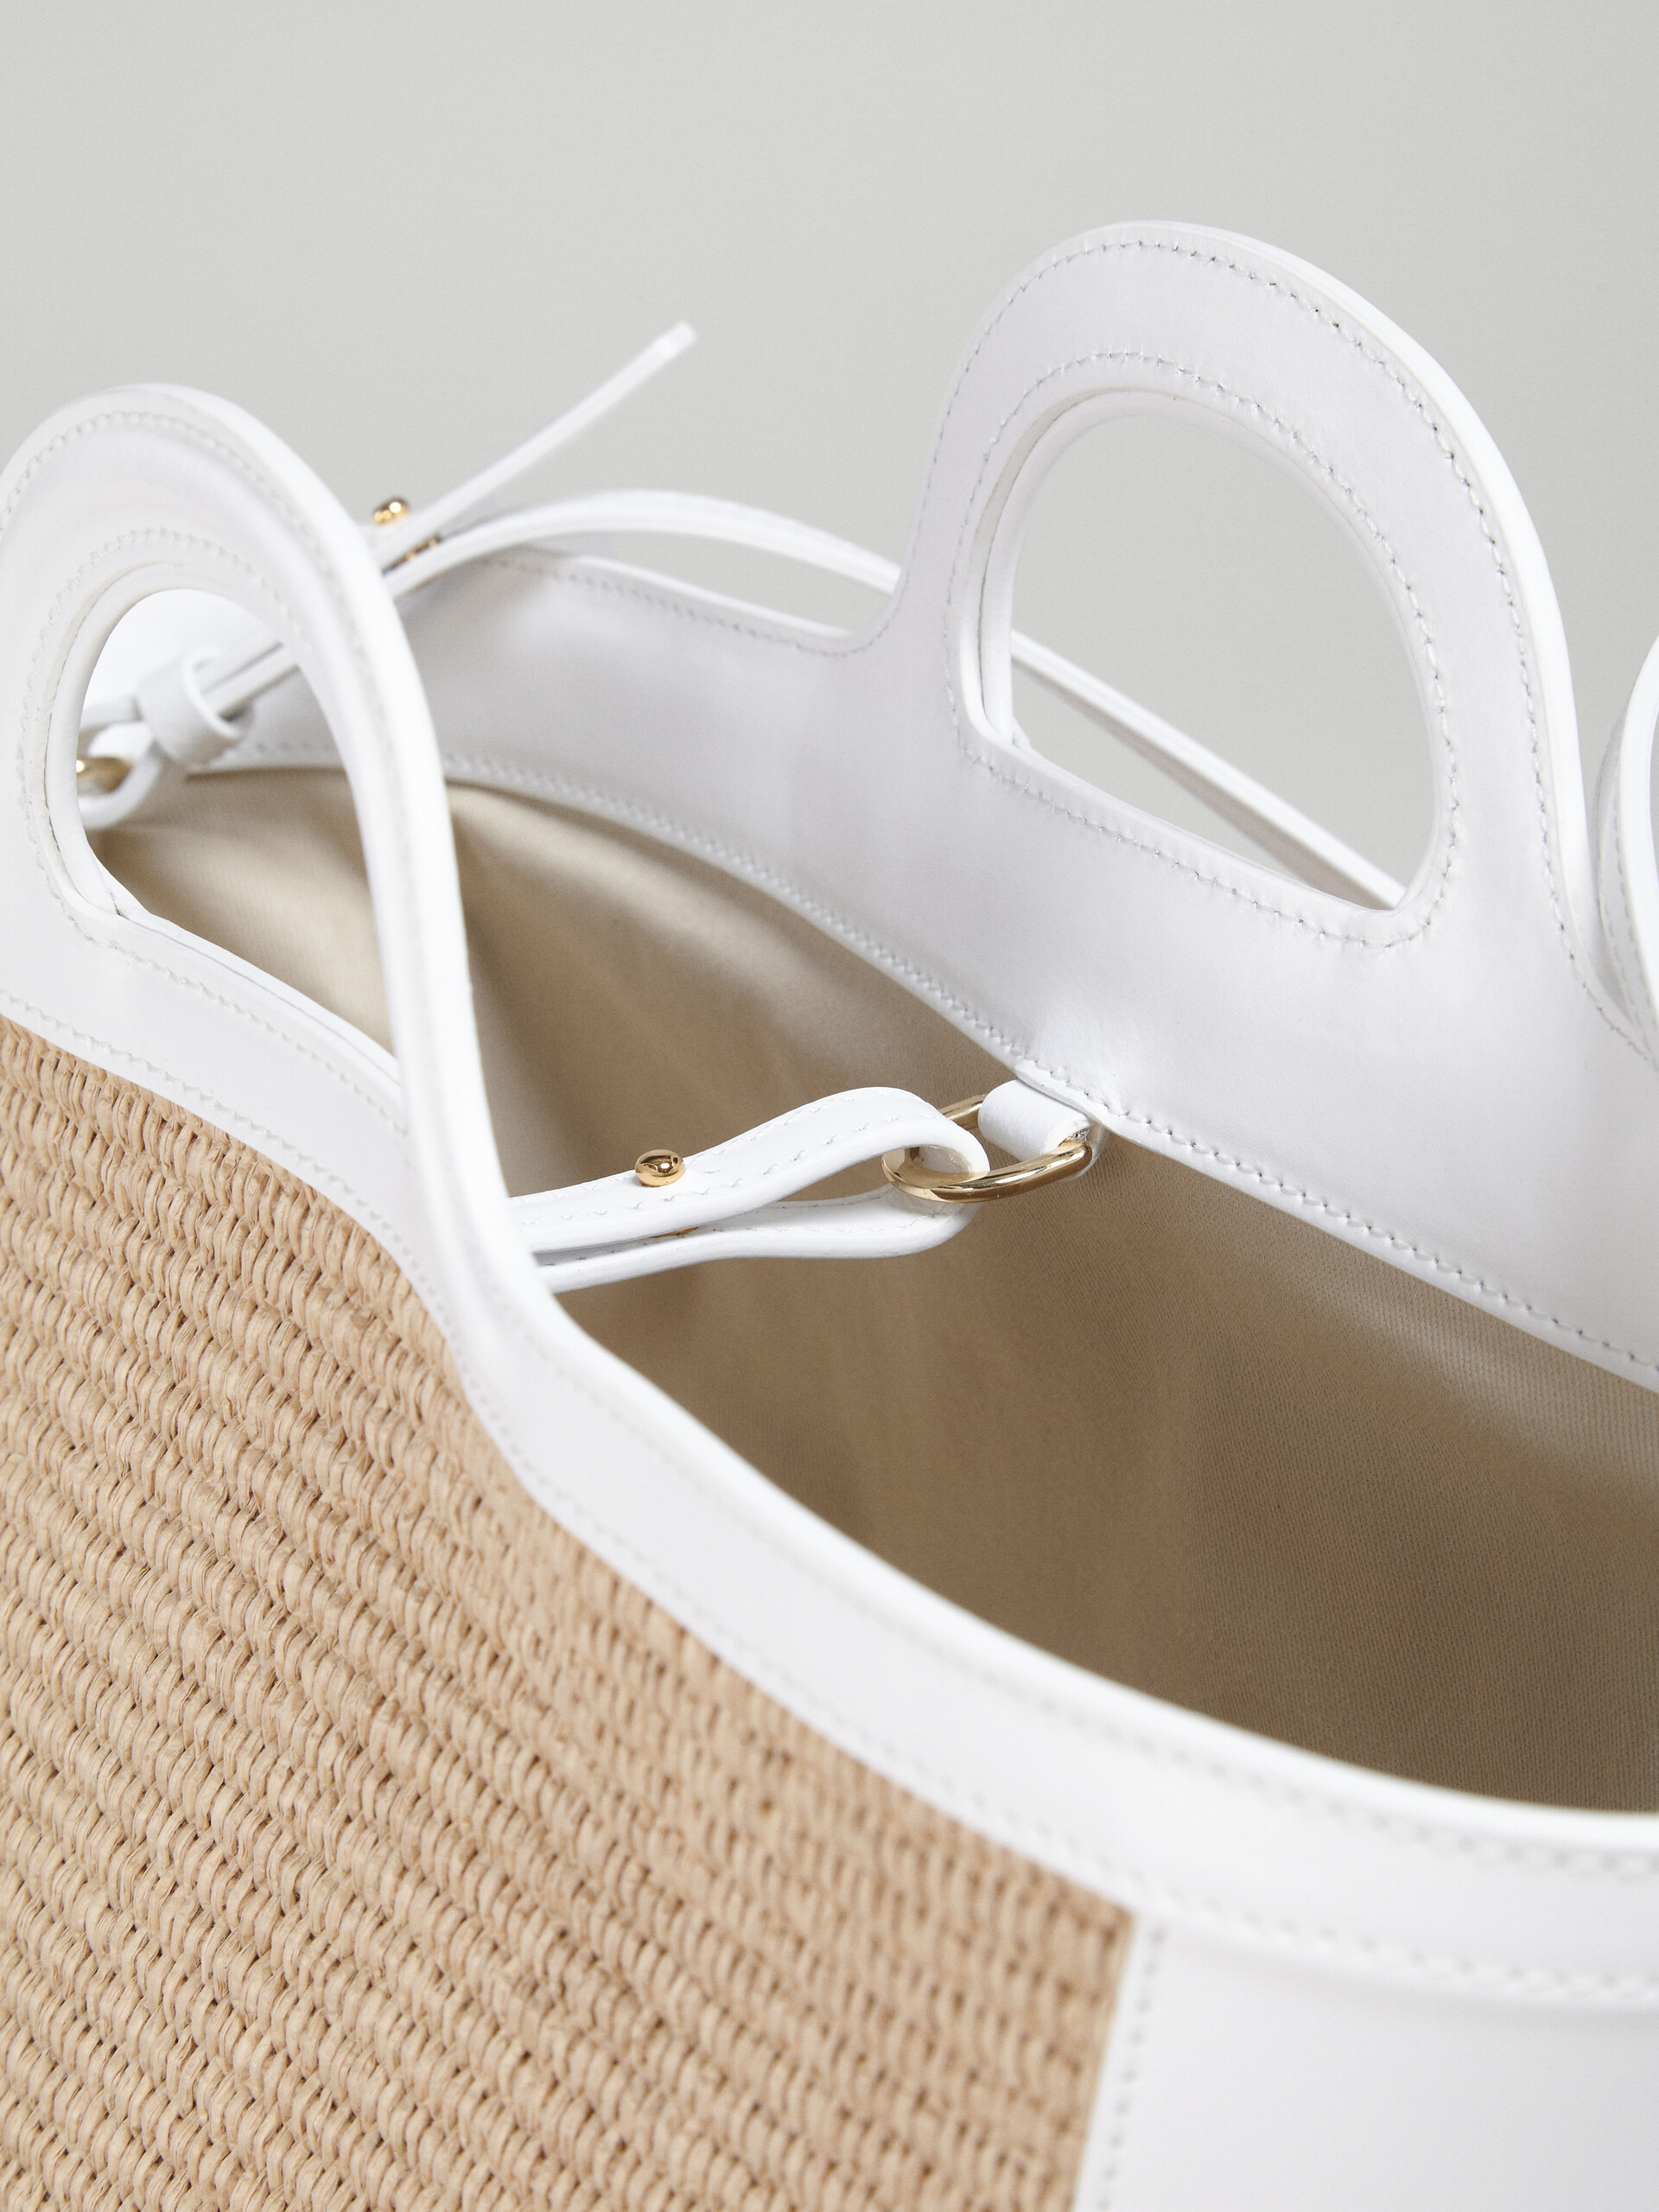 Tropicalia Small Bag in white leather and raffia - Handbag - Image 4